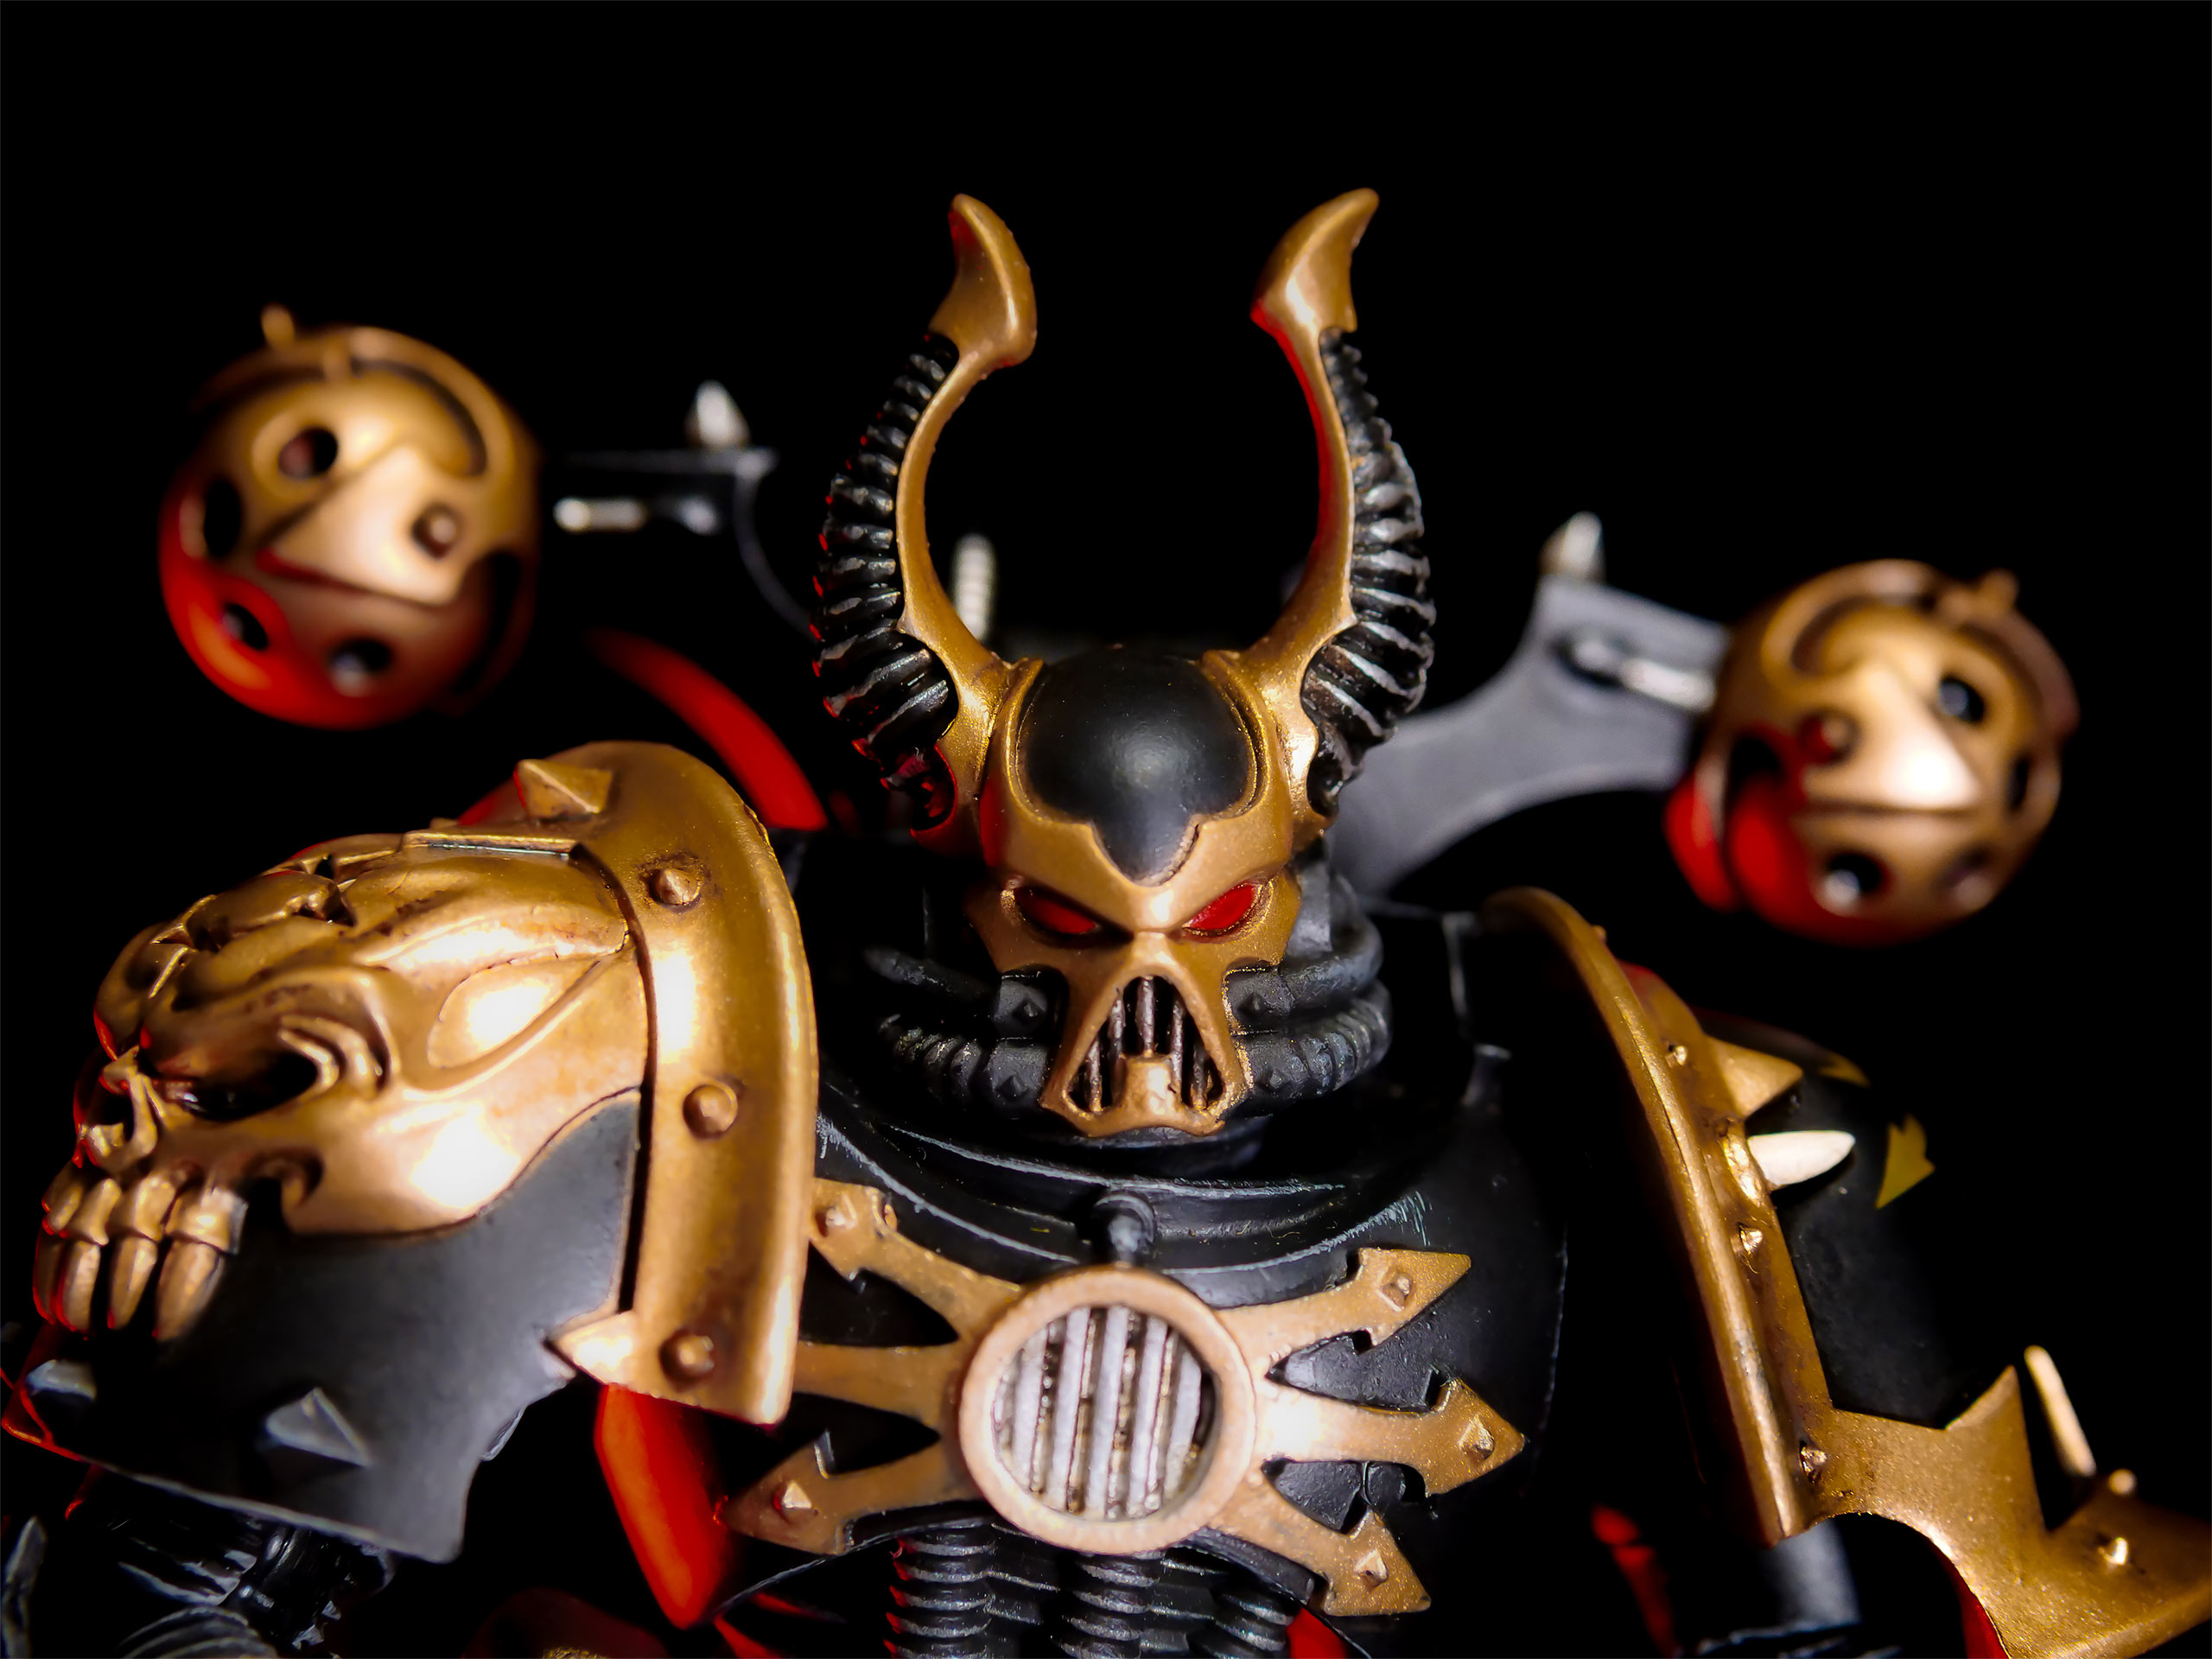 Warhammer 40k - Black Legion Frère Talas Figurine d'action